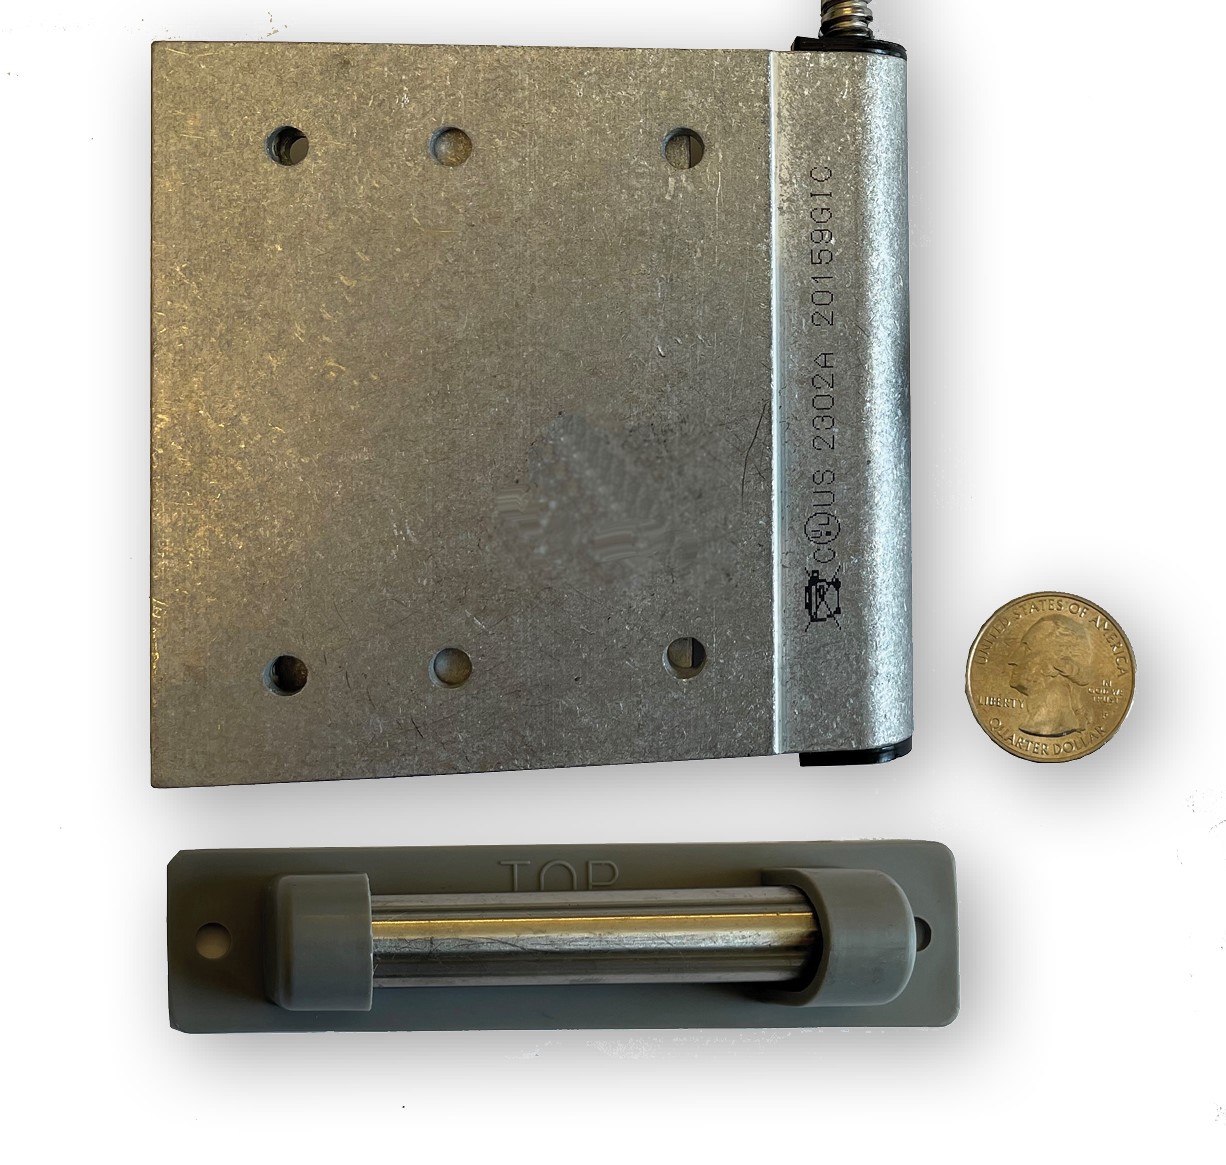 Metal Contact Sensor for Rollup Doors and Gates edit